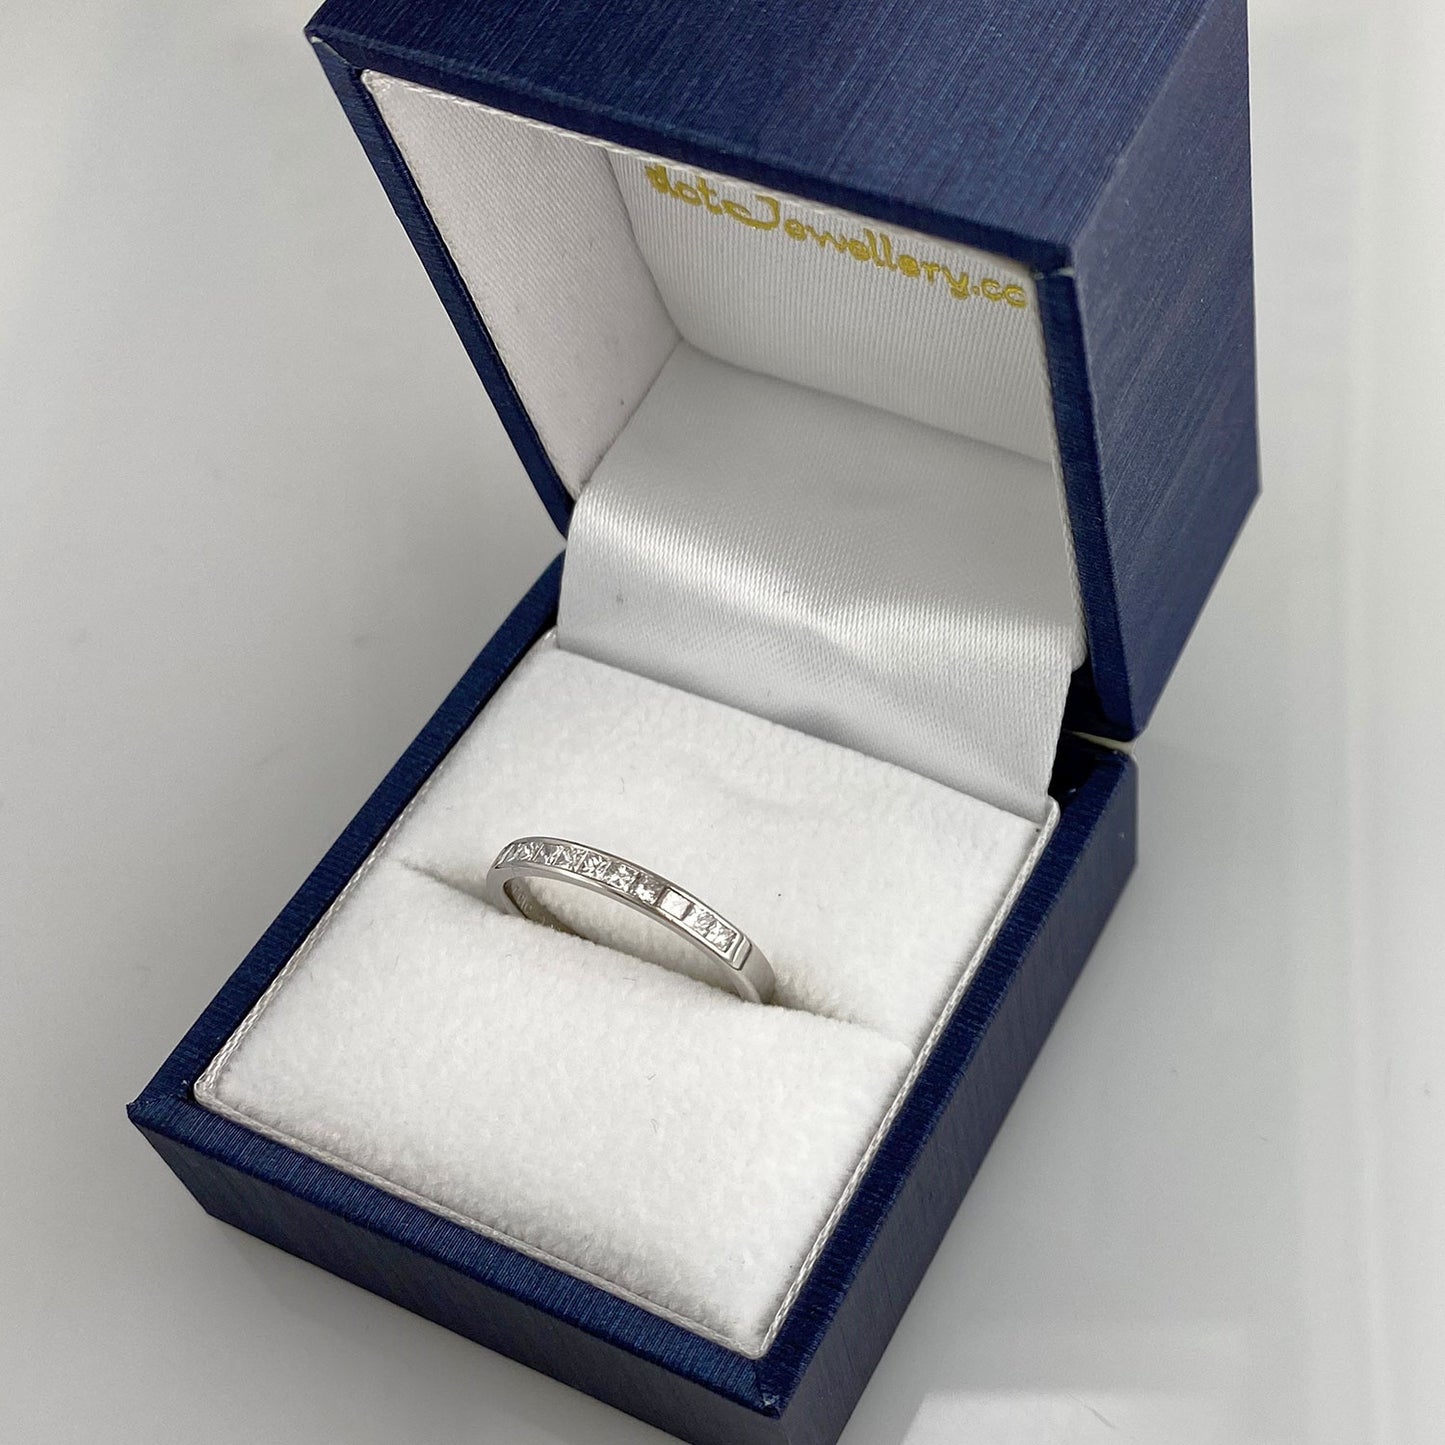 Channel Set Diamond 500 Palladium 2.5mm Wedding Ring